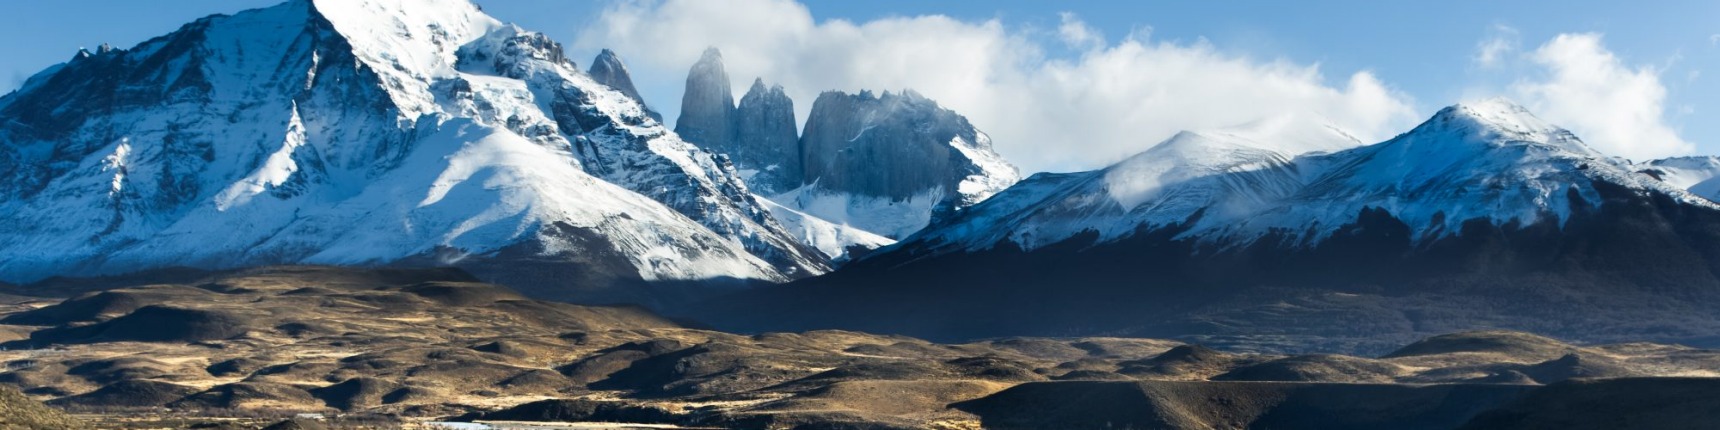 Chile, road, mountain range